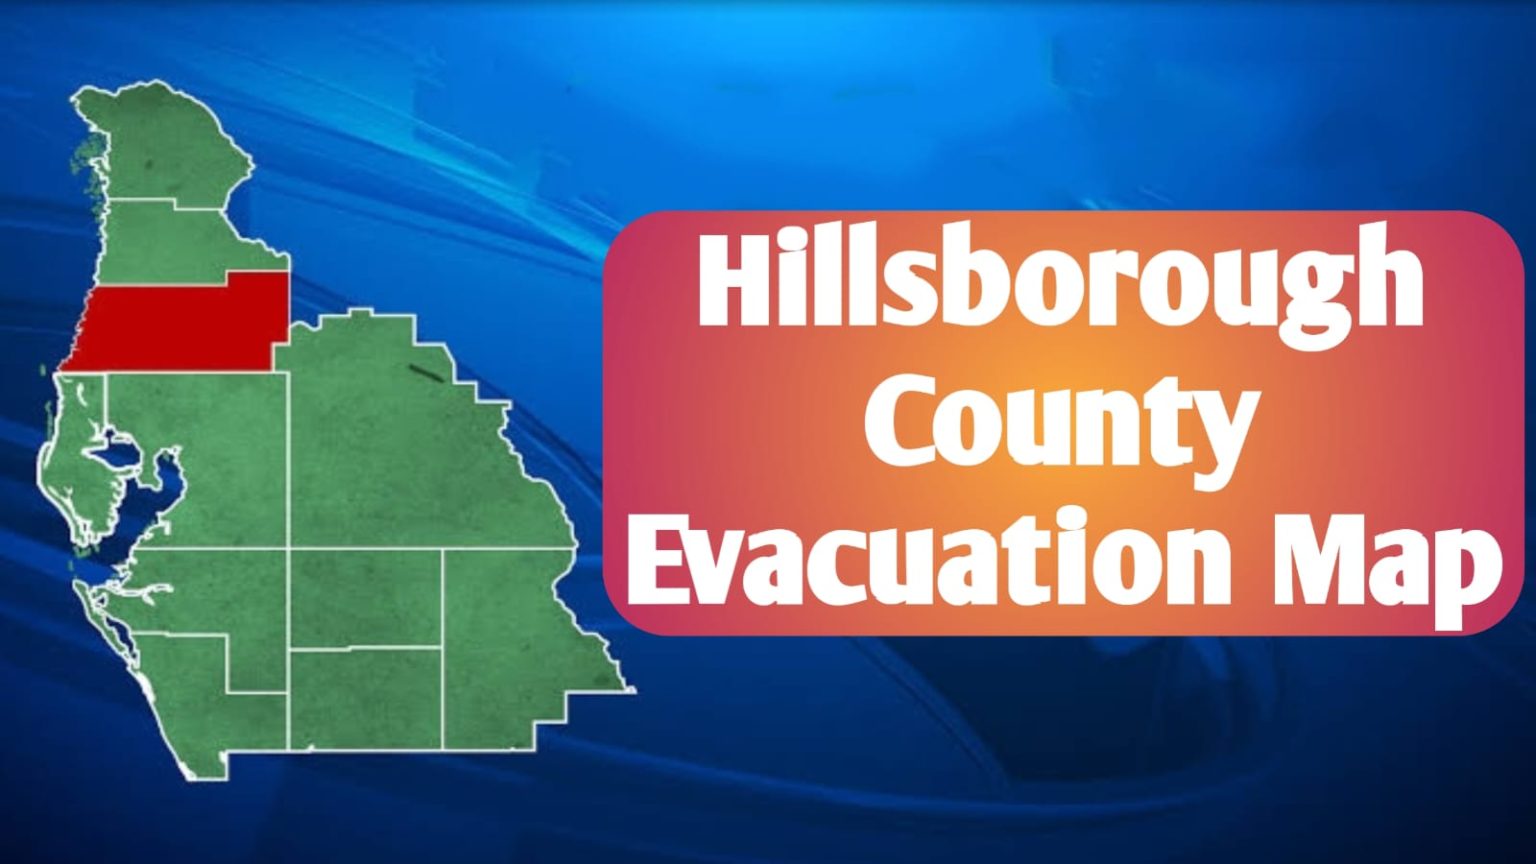 Hillsborough County Evacuation Map PDF Free Download